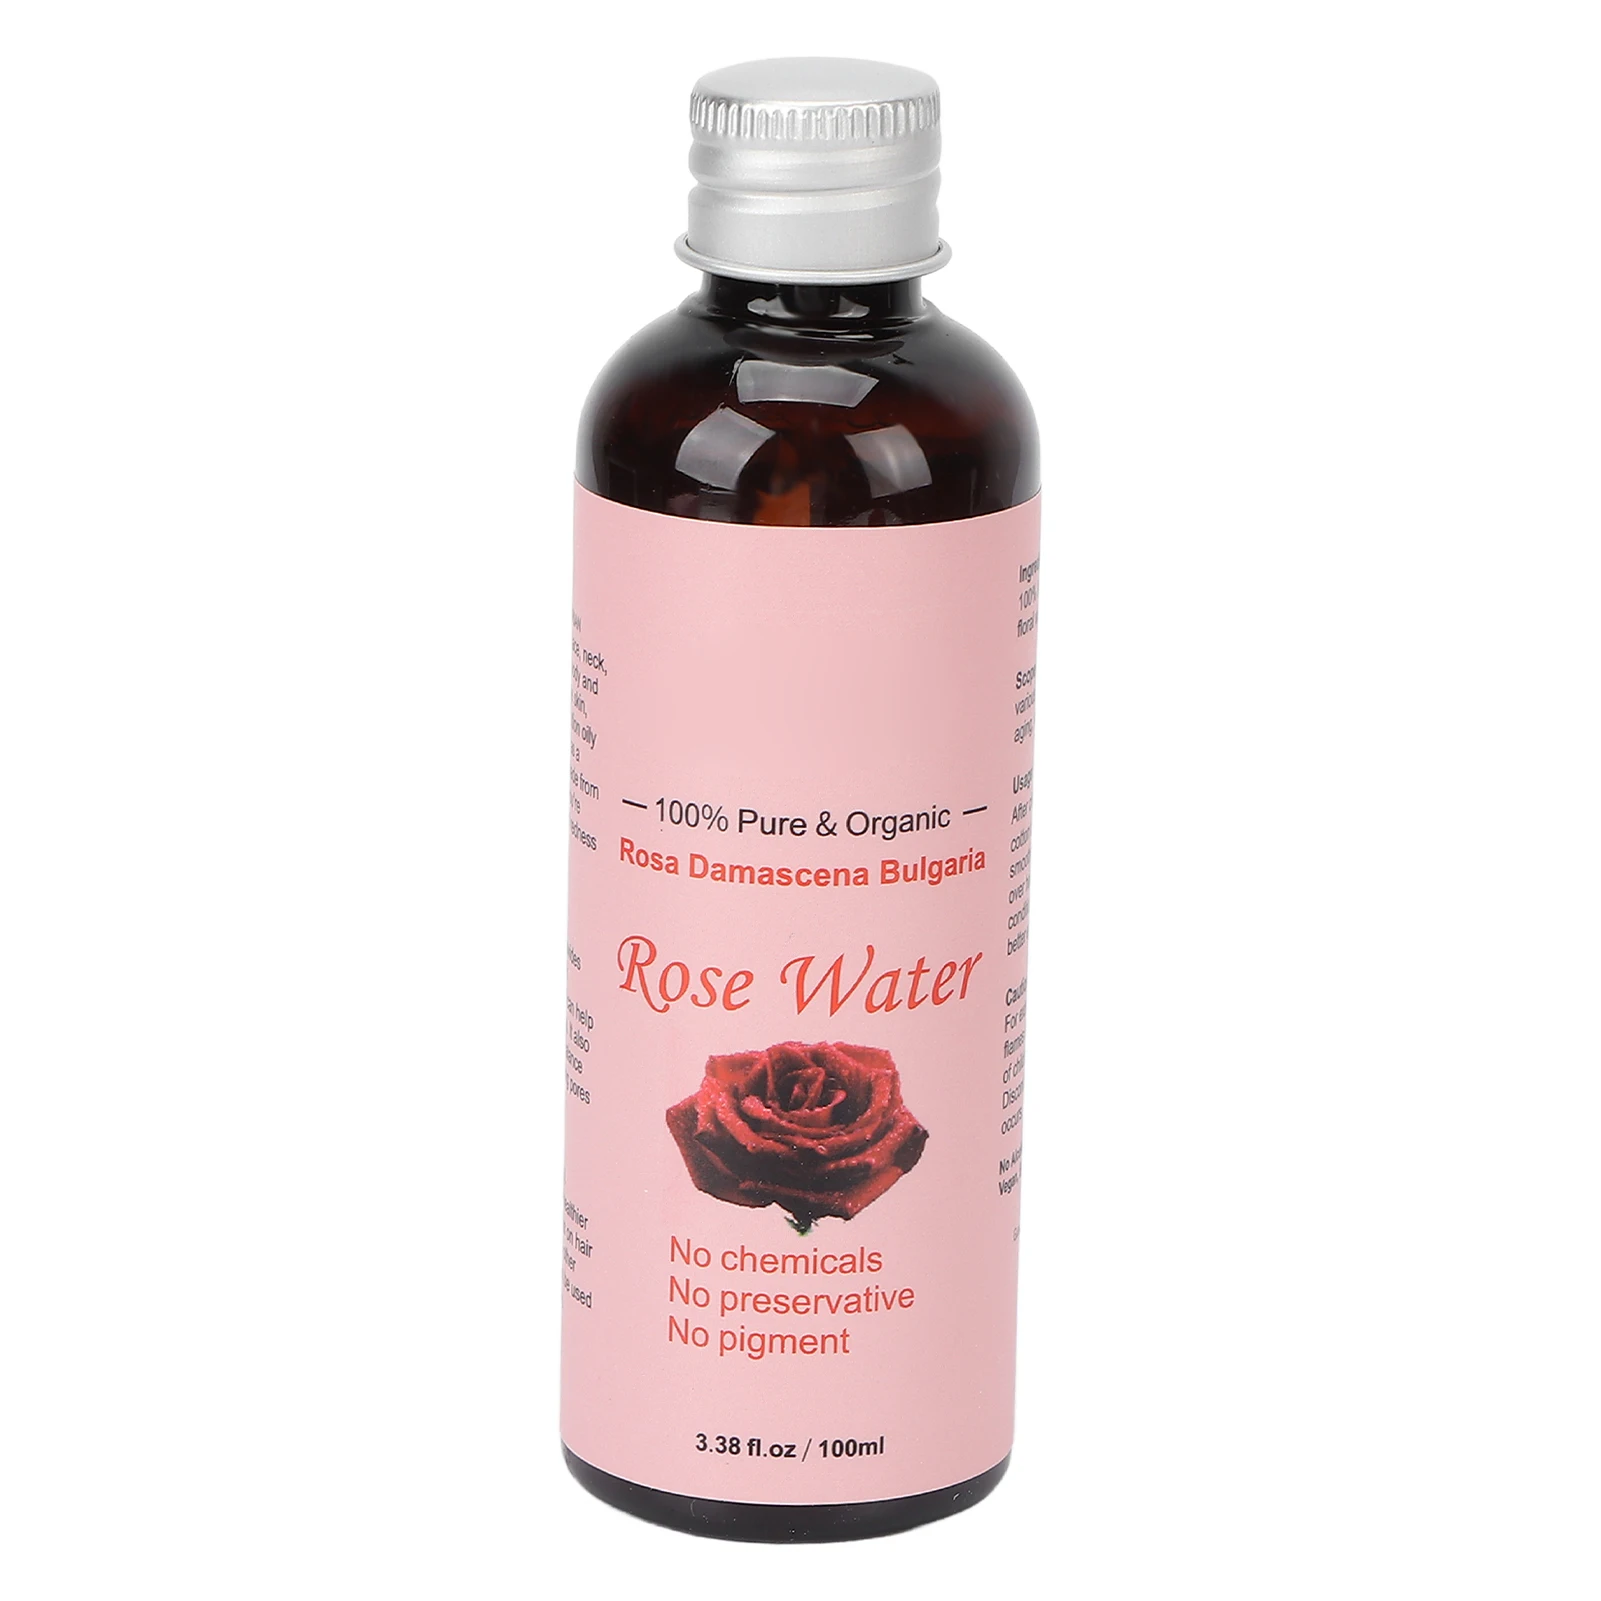 

Coazon Rose Water Skin Care Hydrating Organic Rose Water Facial Toner Moisturizer for Women 100ml